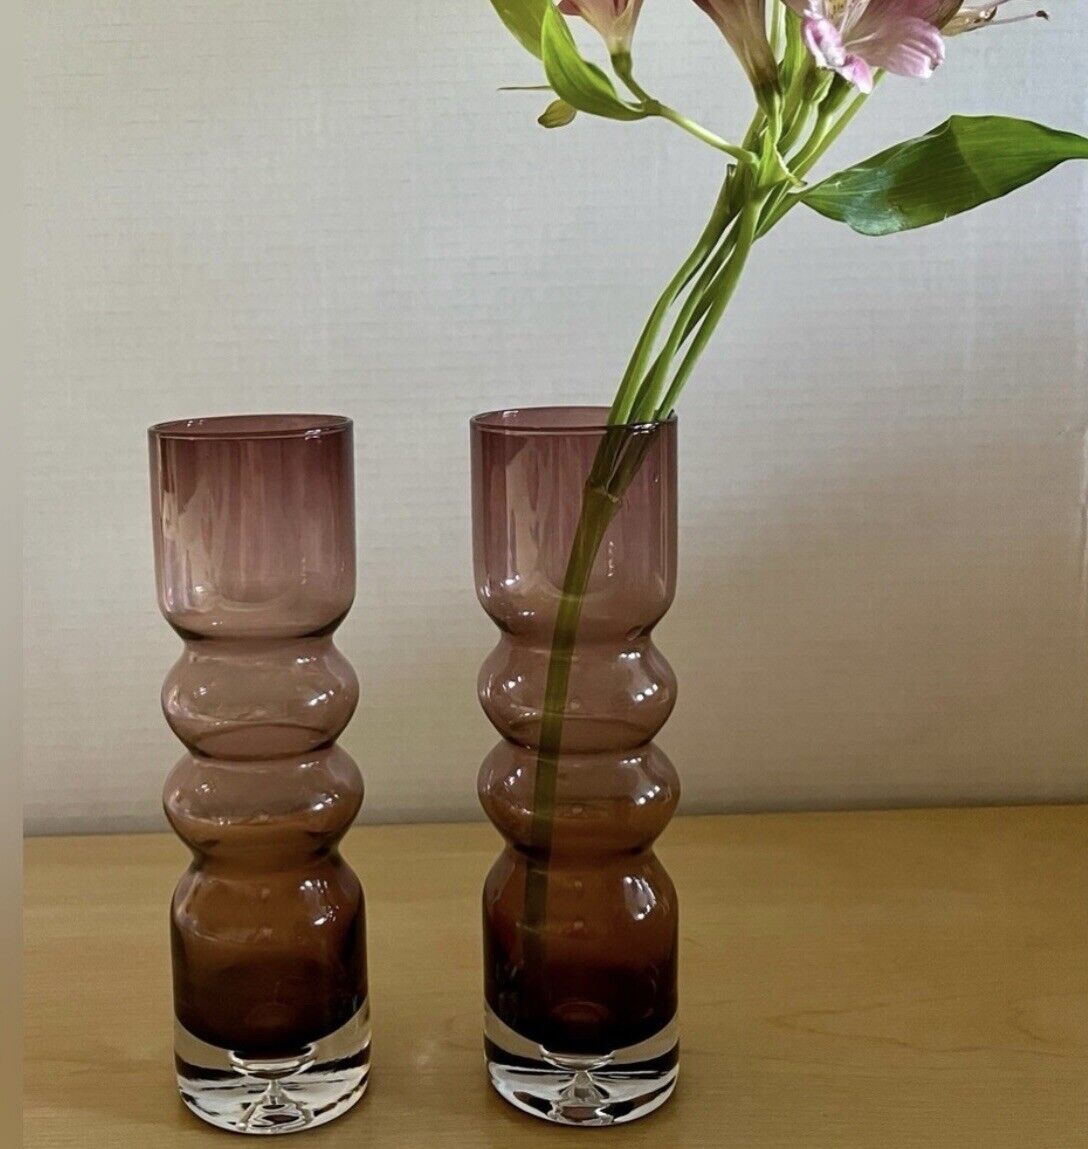 MCM Aseda Bo Borgstrom Swedish bubble vases, sold together or separately